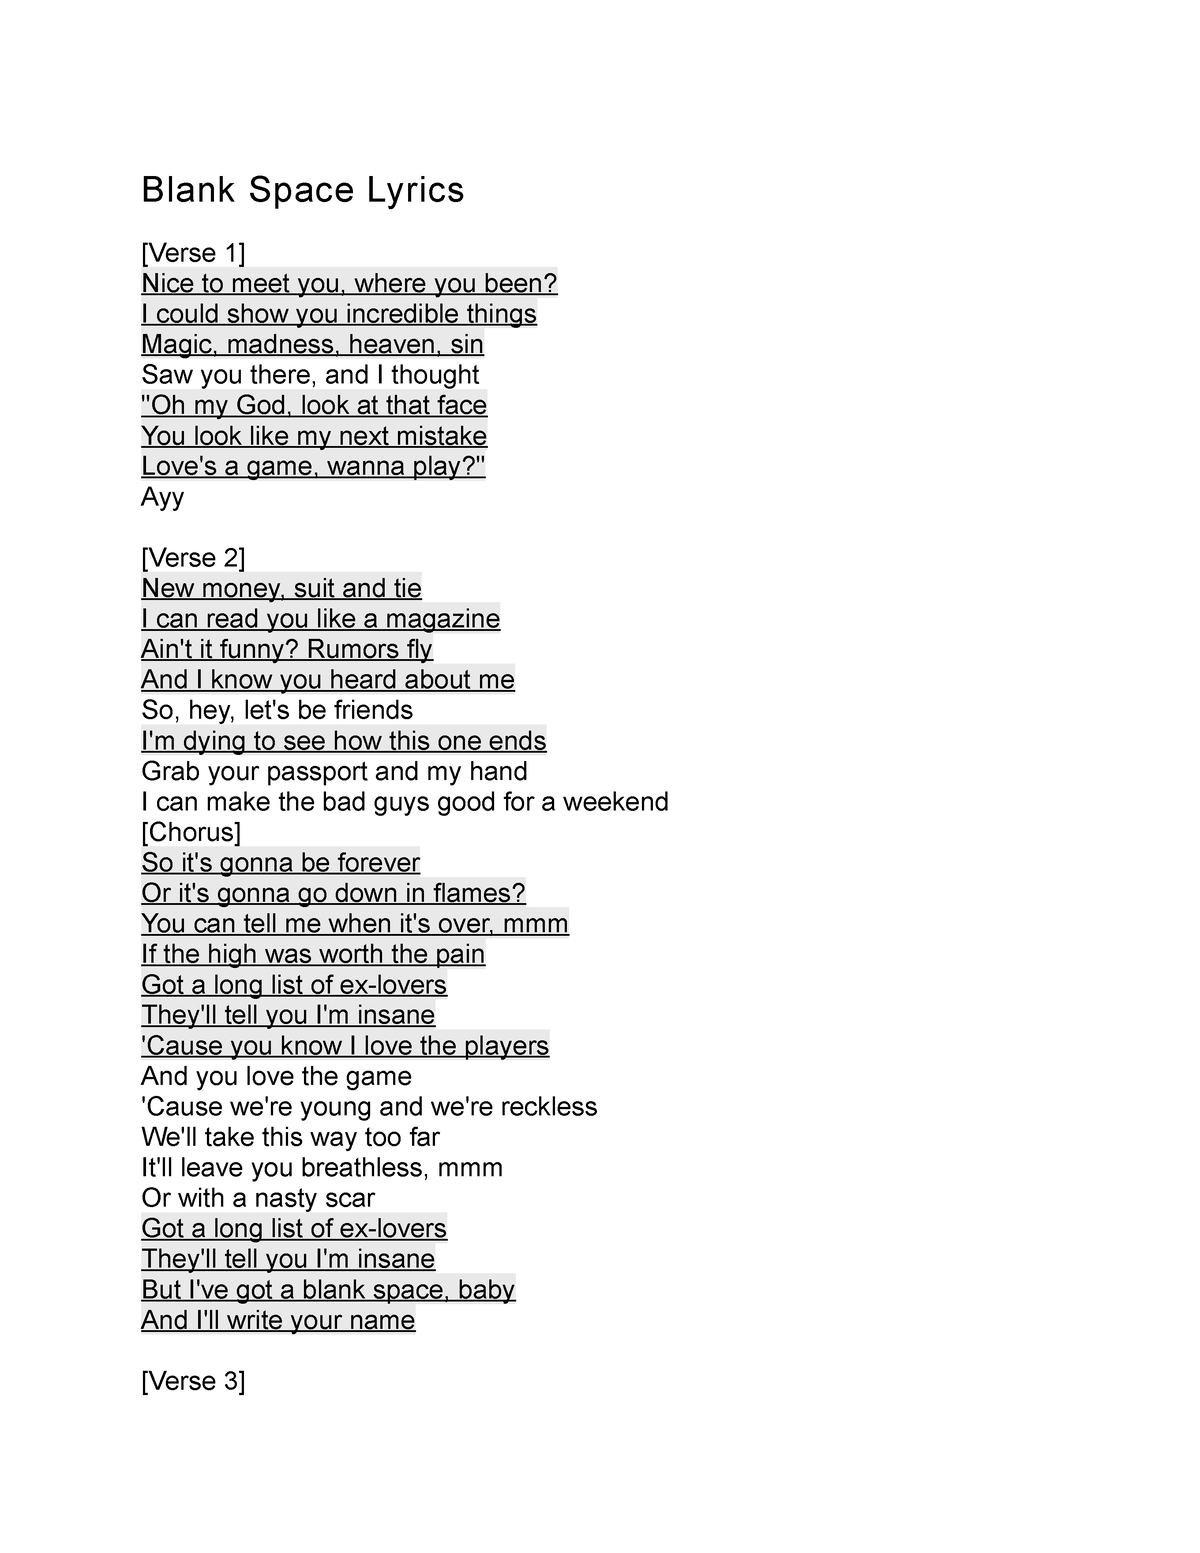 blank space - swift #taylorswift #blankspace #lyrics #lov3 #music